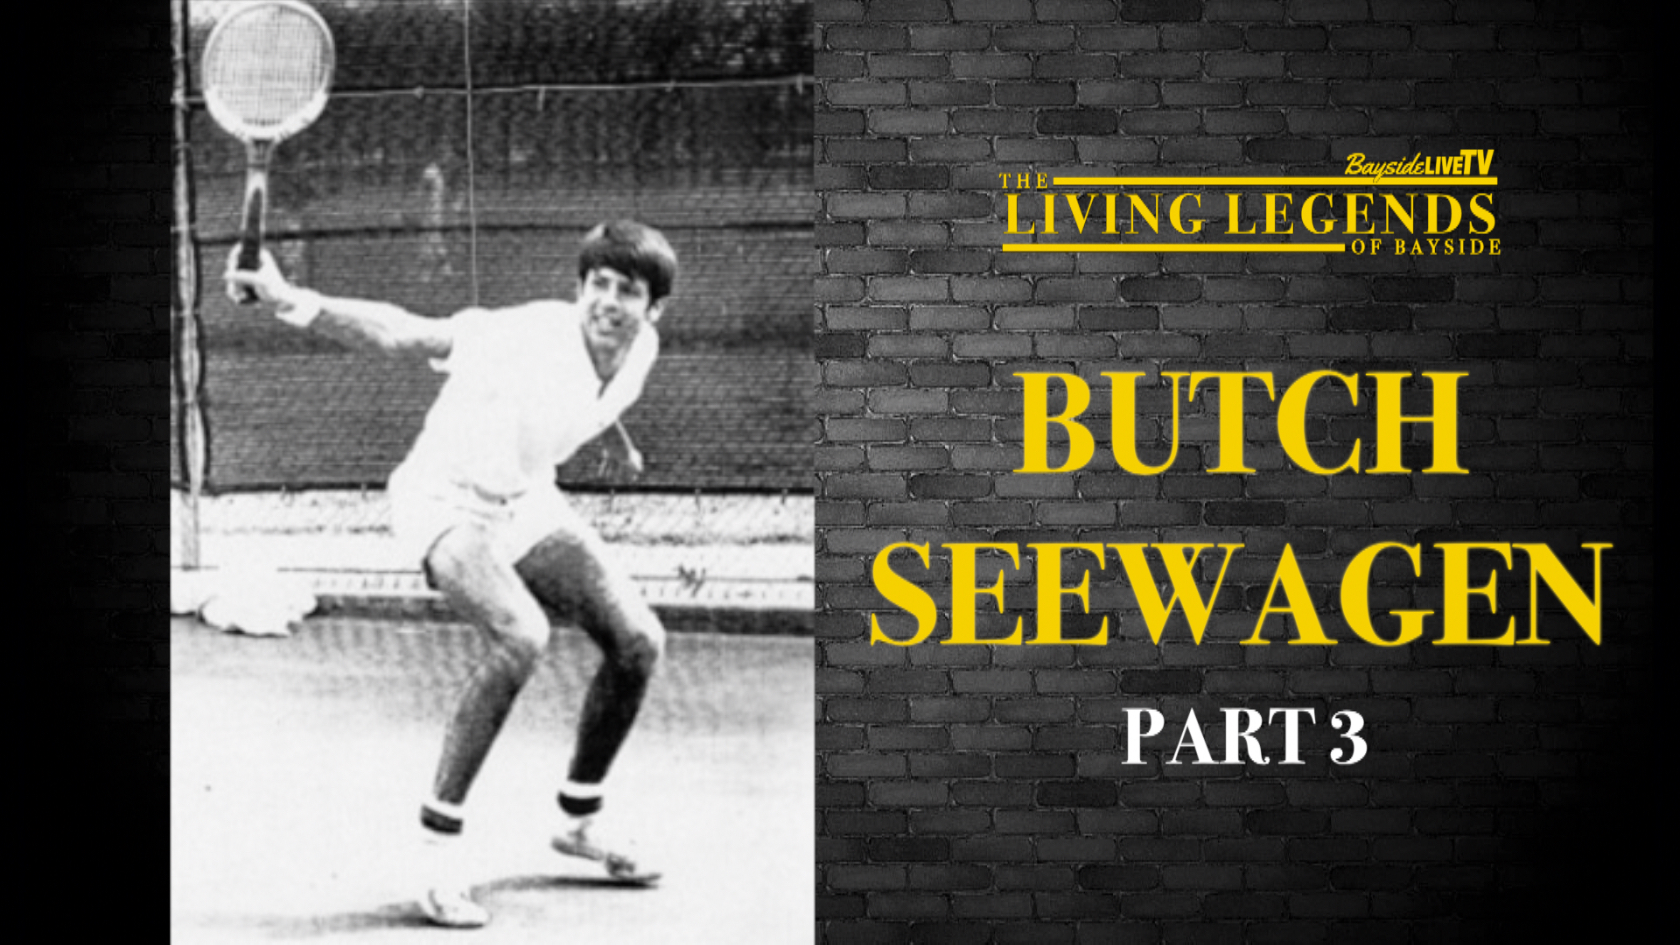 The Living Legends of Bayside: Butch Seewagen Part 3